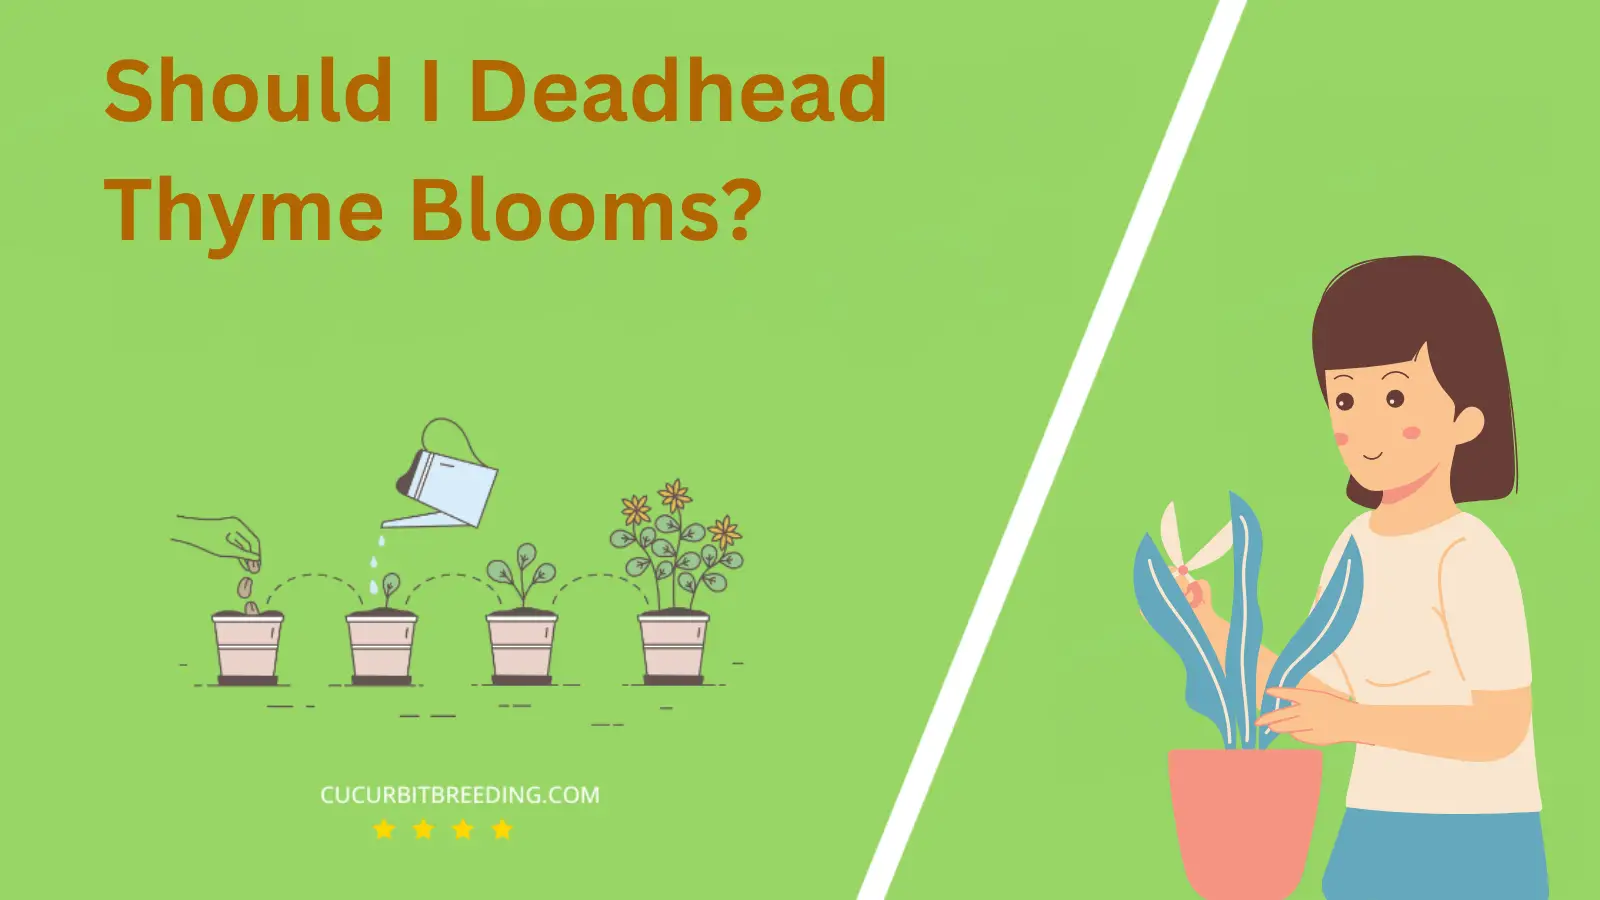 Should I Deadhead Thyme Blooms?